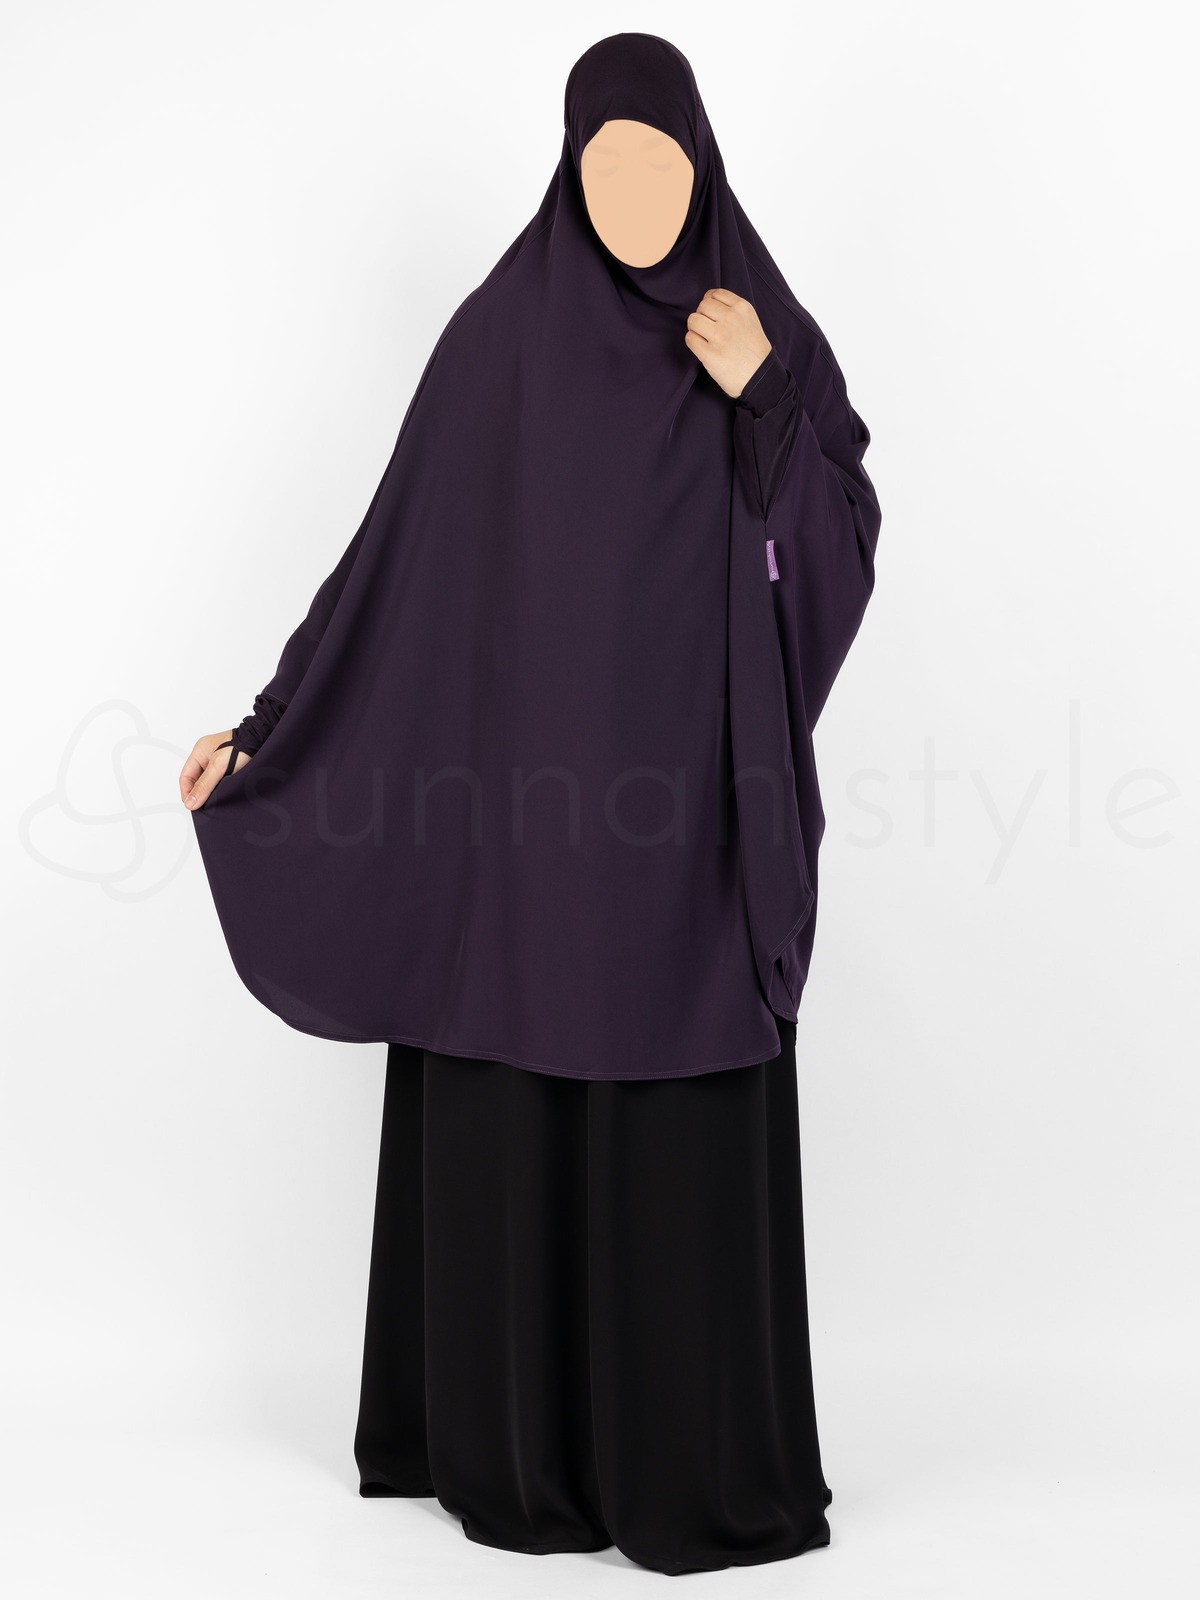 Sunnah Style - Signature Jilbab Top - Knee Length (Dark Violet)